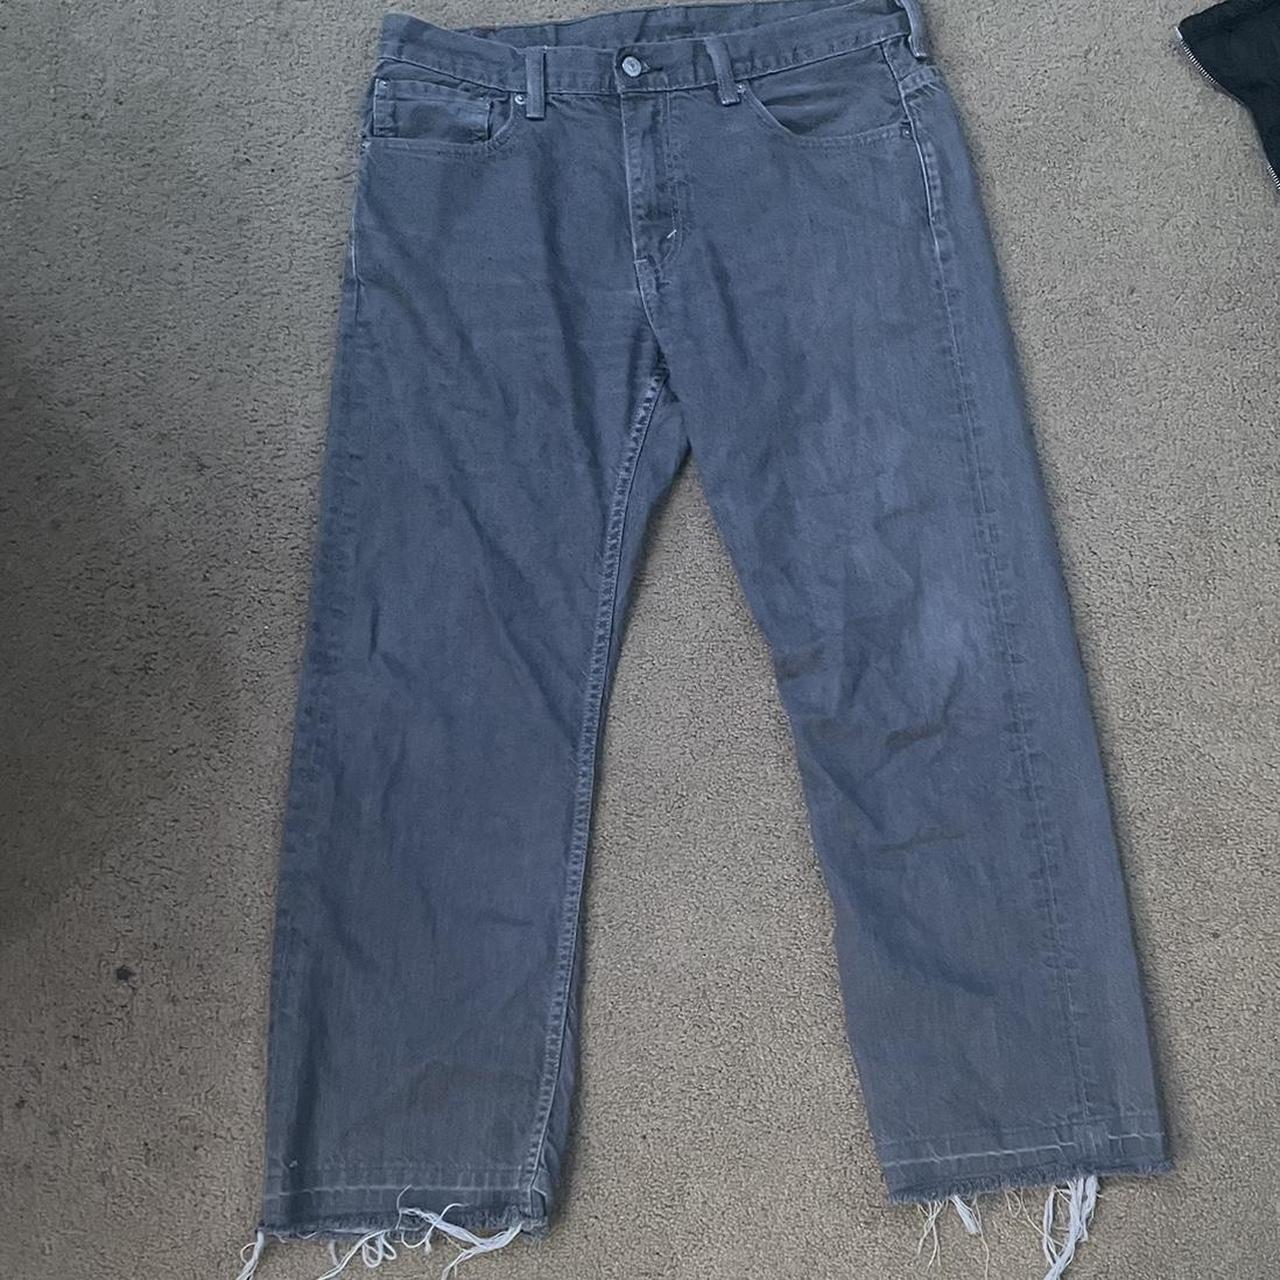 Straight legged Levi jeans - Depop